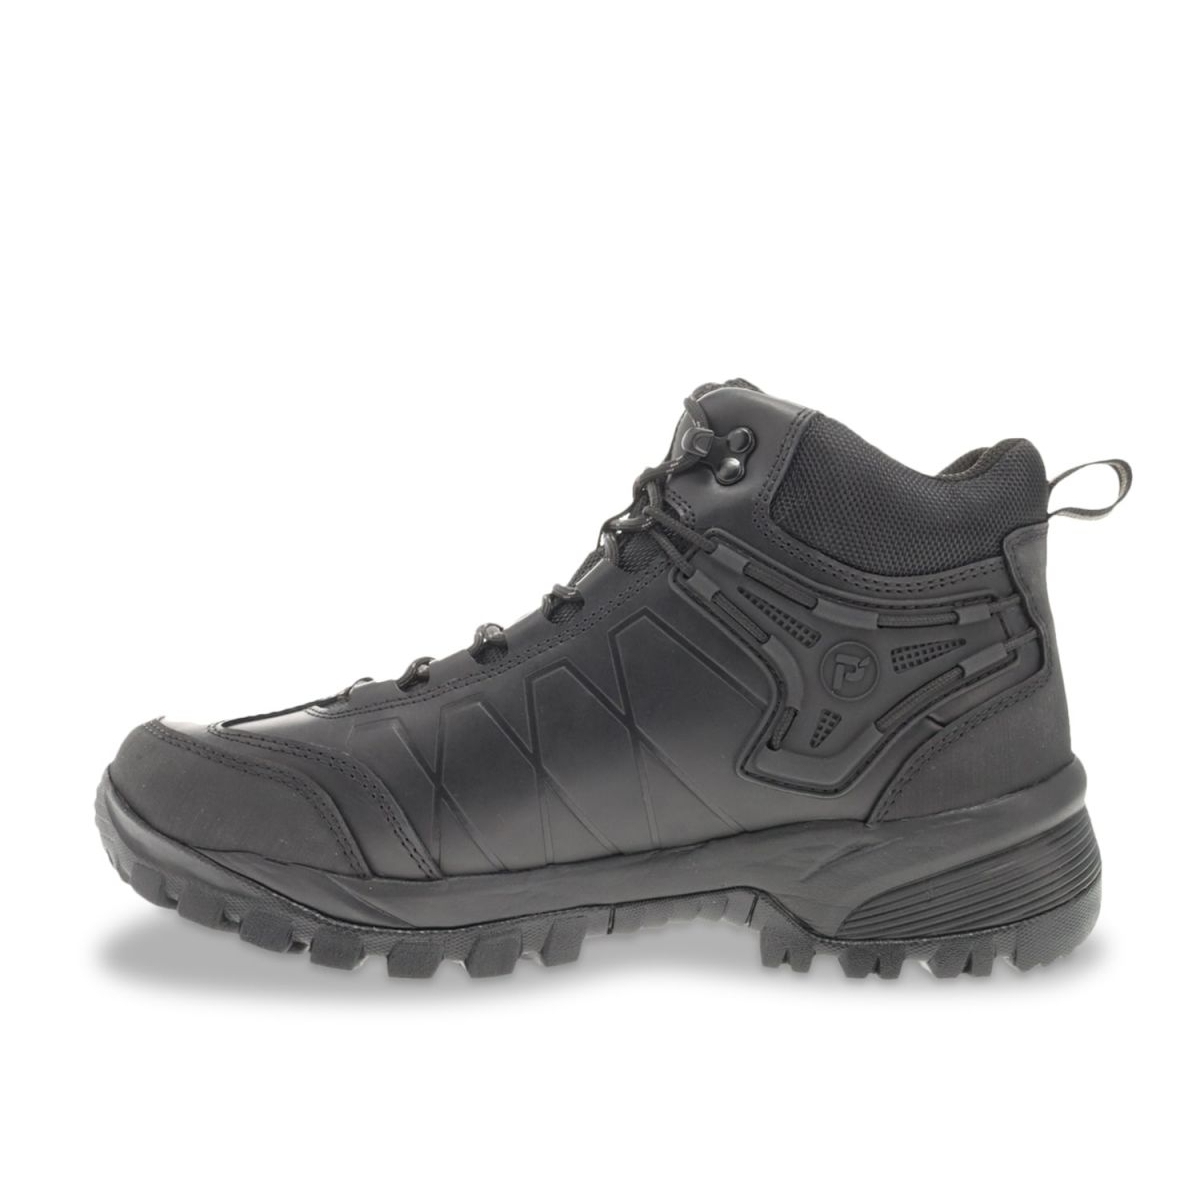 Propet Men's Ridge Walker Force Hiking Boots Black - MBA052LBLK BLACK - BLACK, 11.5 Wide